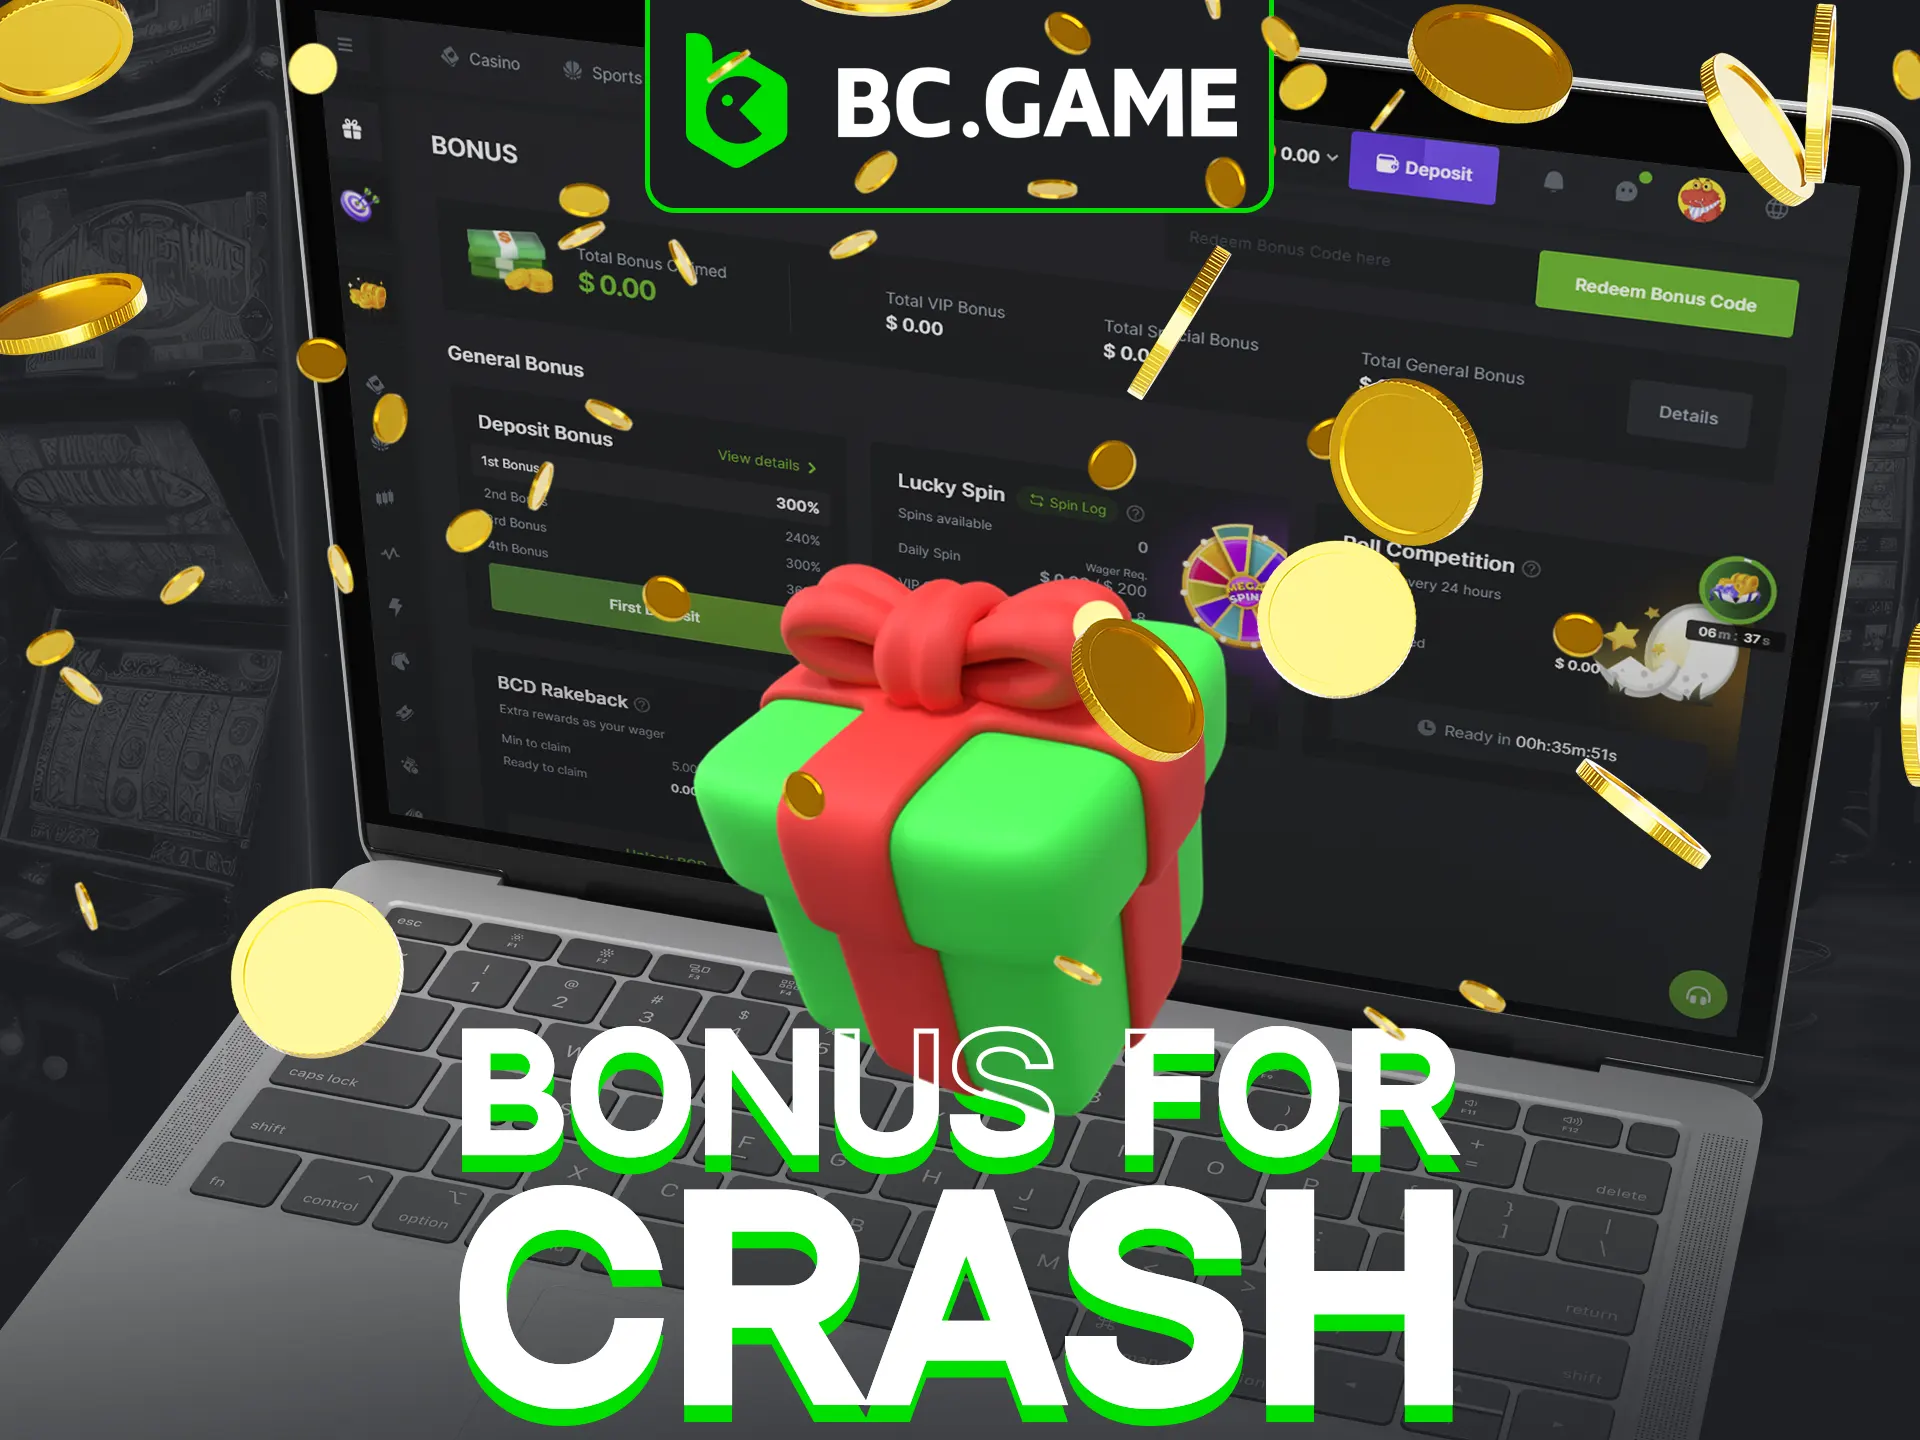 Boost BC Game Crash winnings with bonus offer.